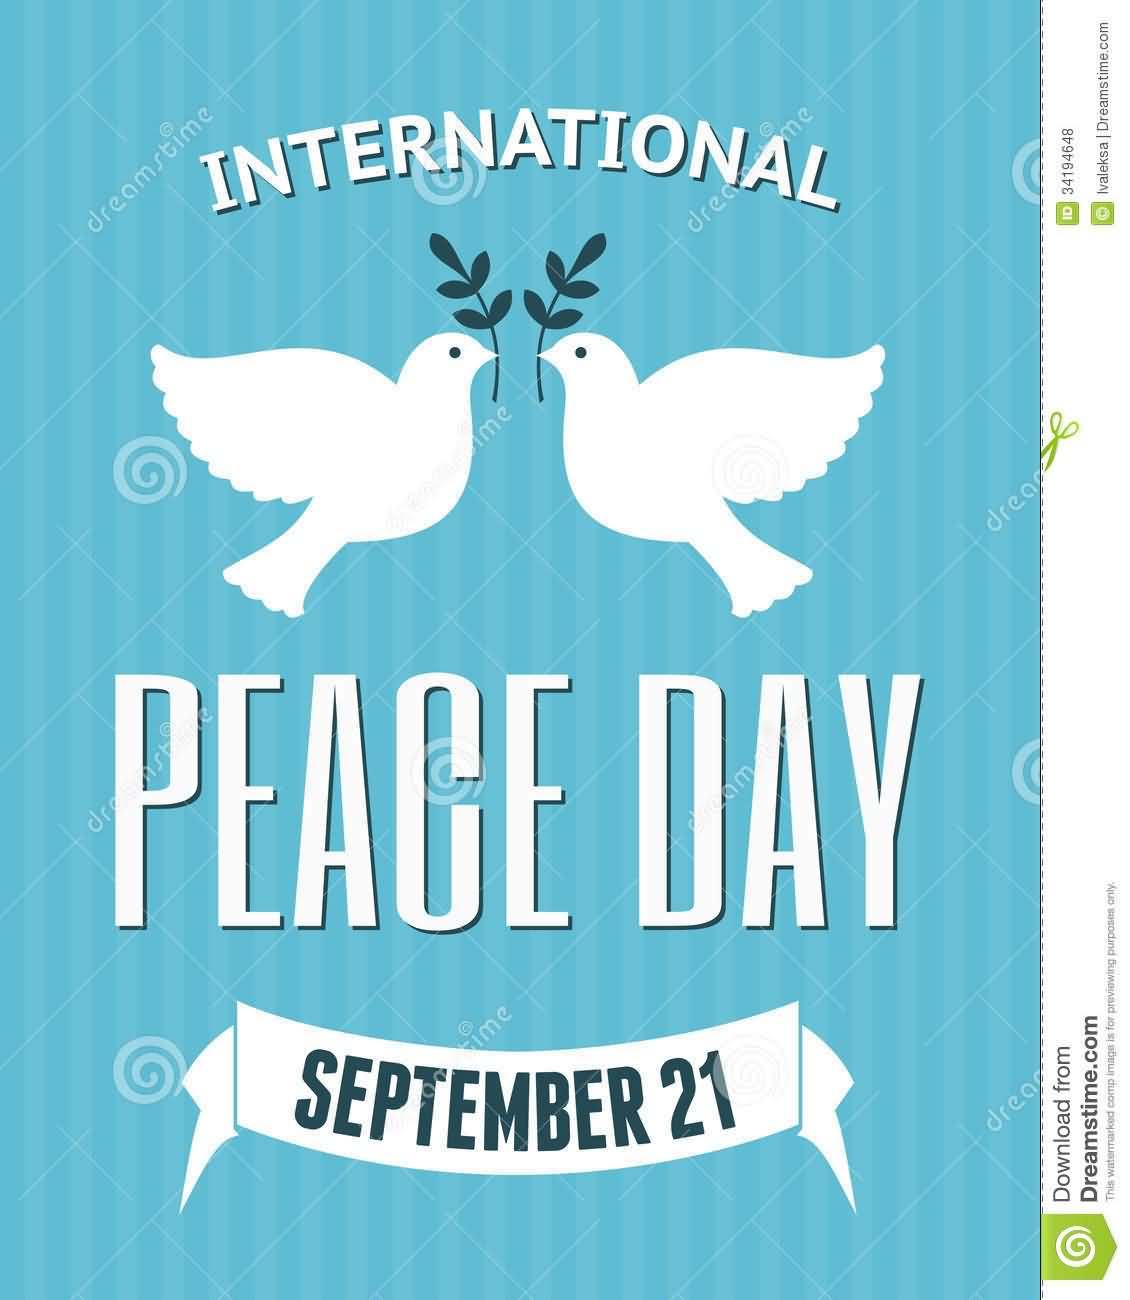 International Peace Day September 21 Illustration